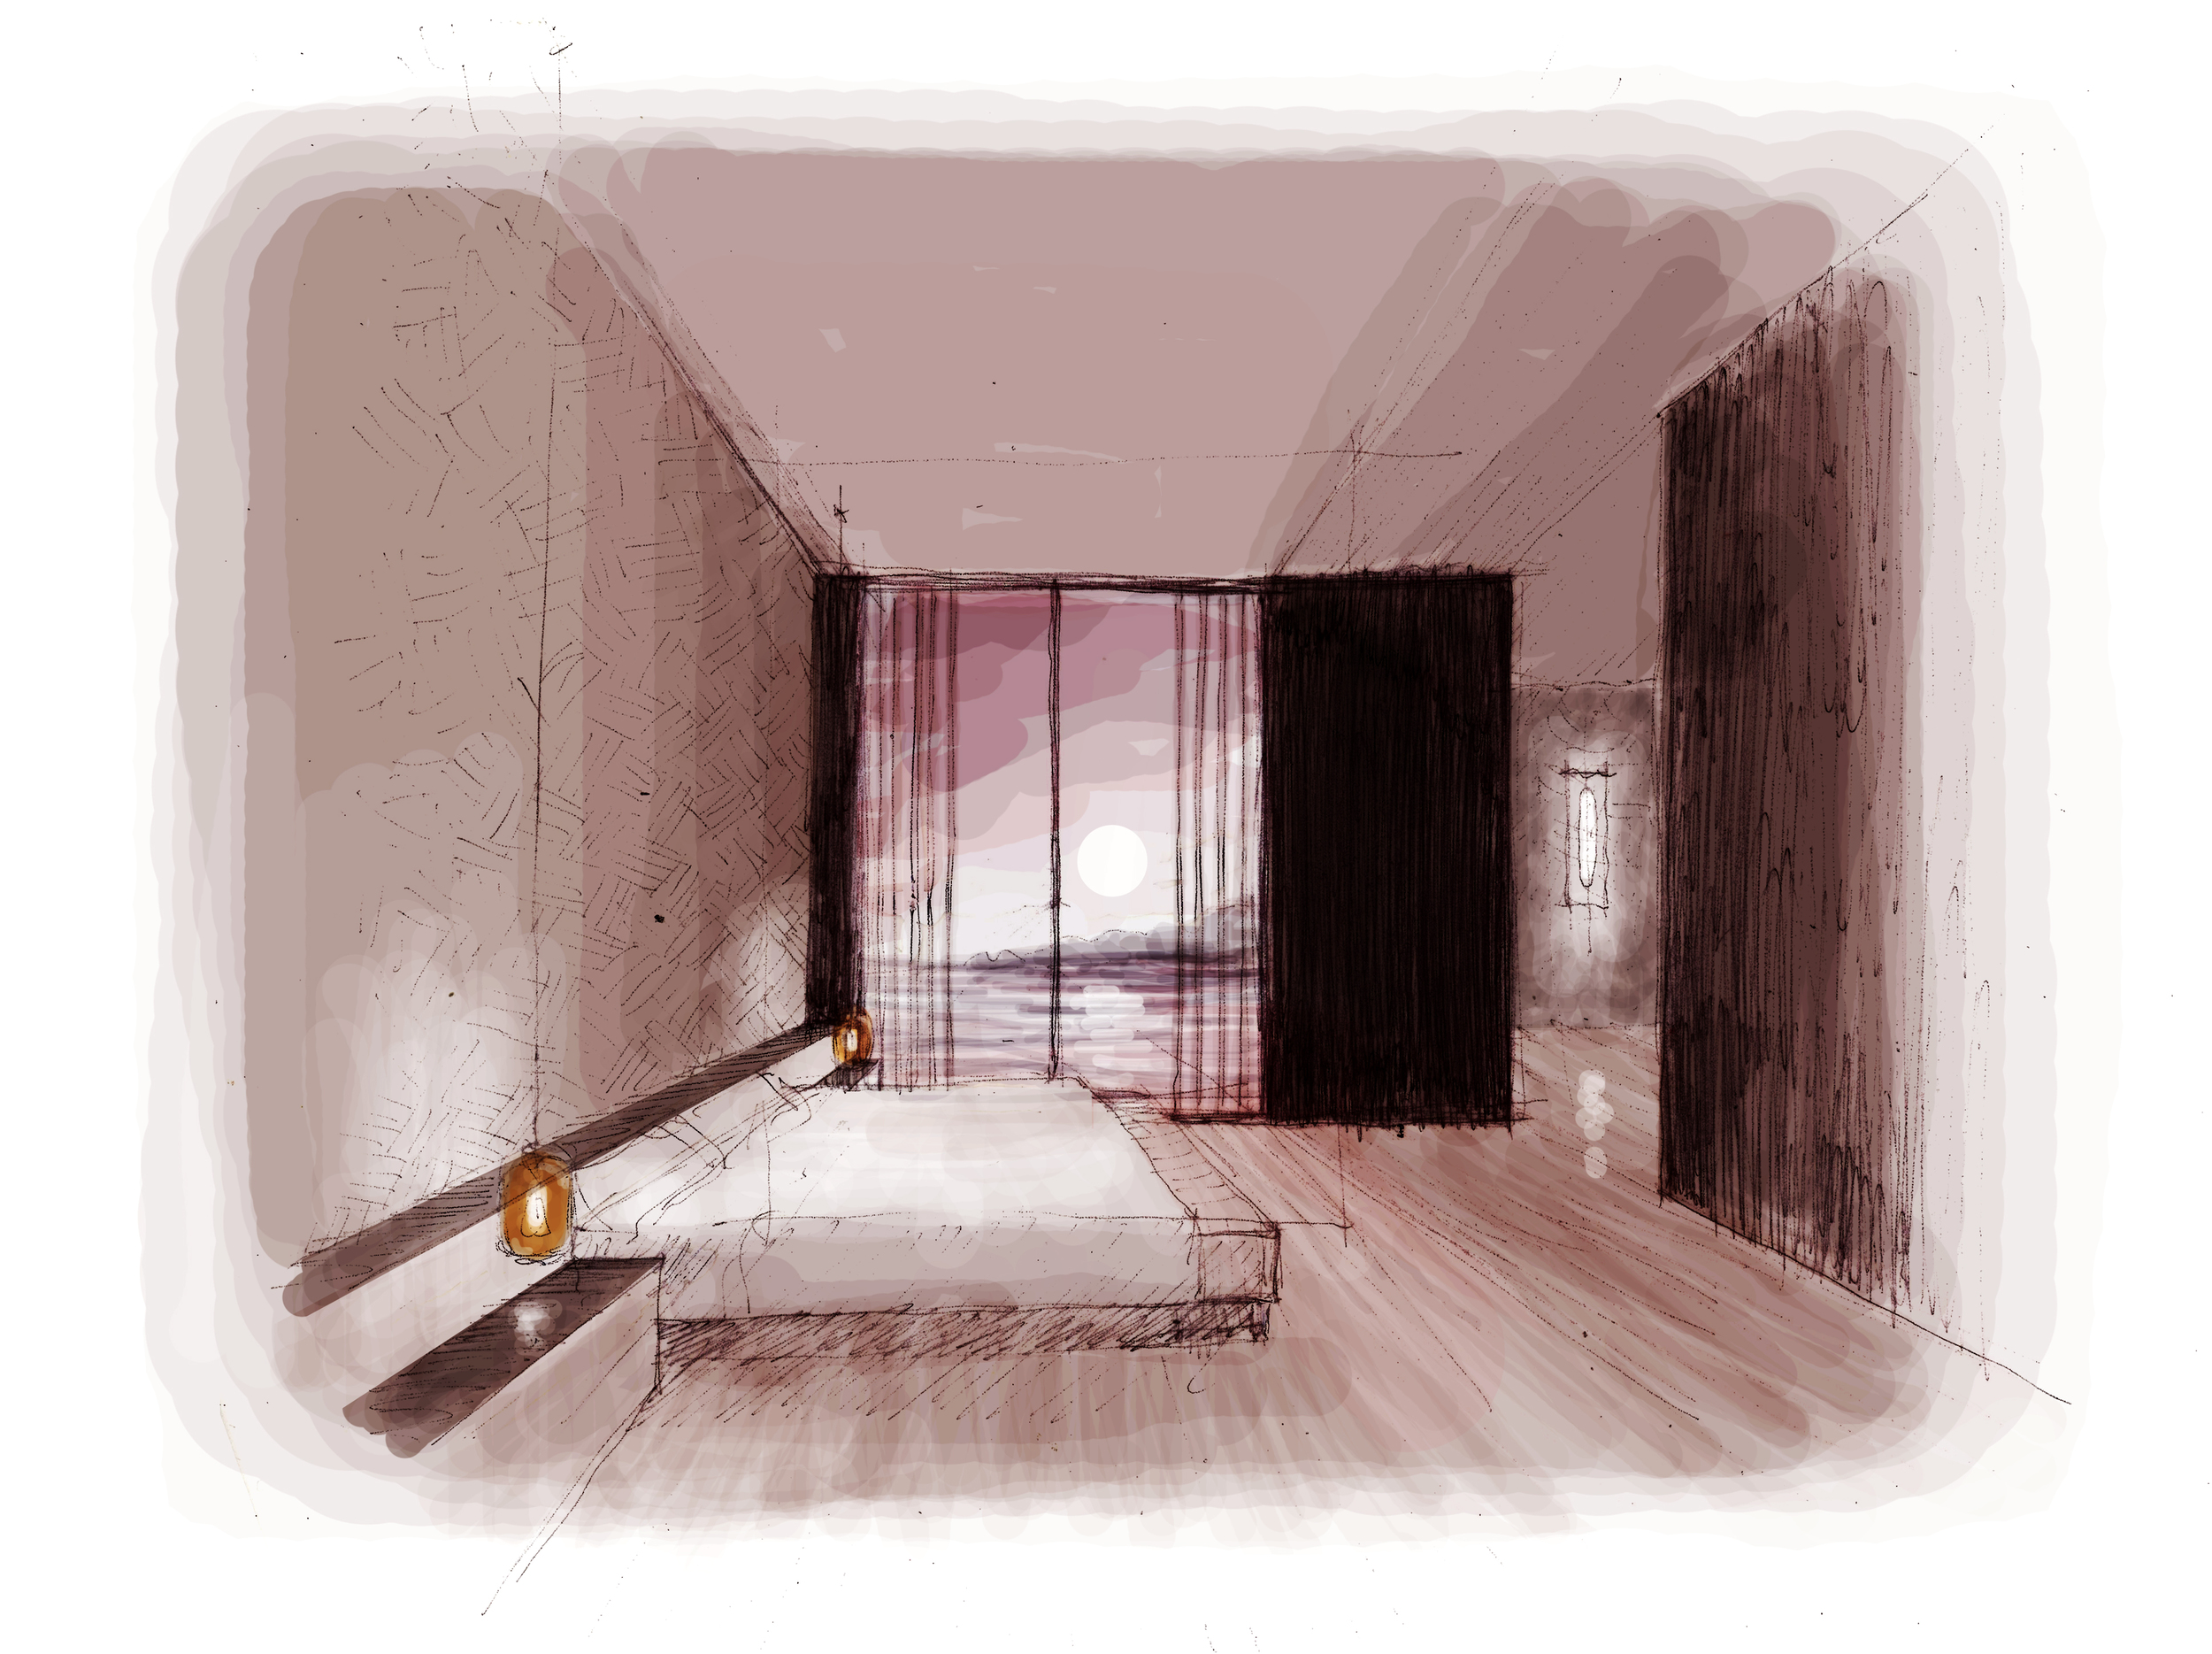 BOIFFILS-Dian Shan Lake-Sketch-Room-02.jpg